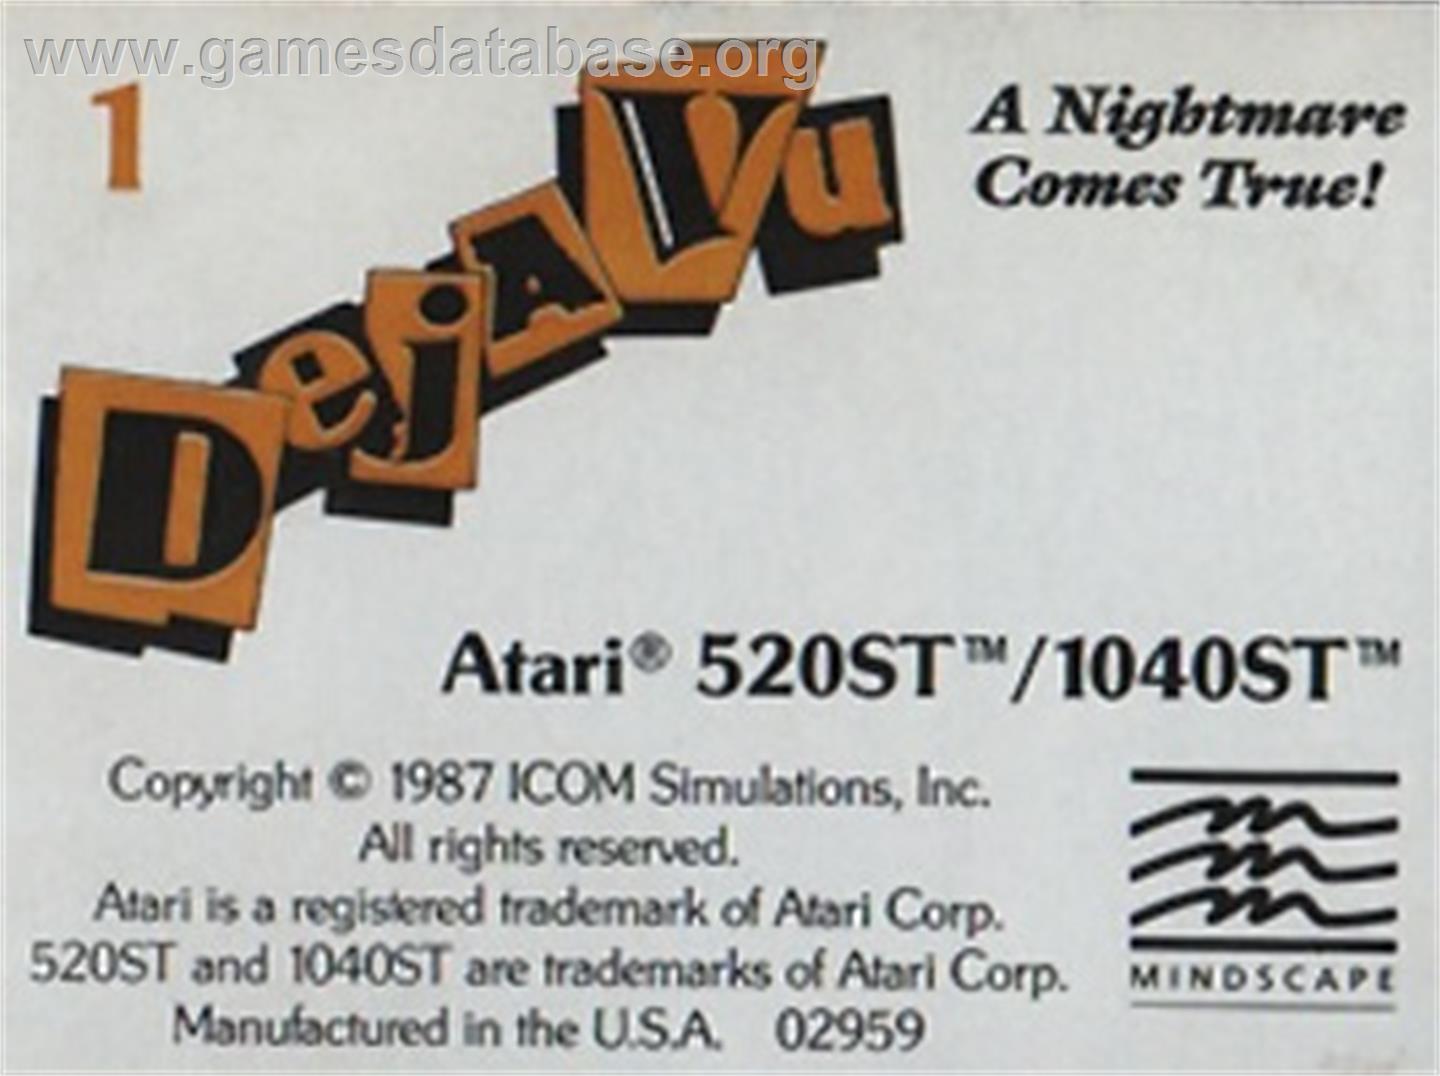 Deja Vu: A Nightmare Comes True - Atari ST - Artwork - Cartridge Top